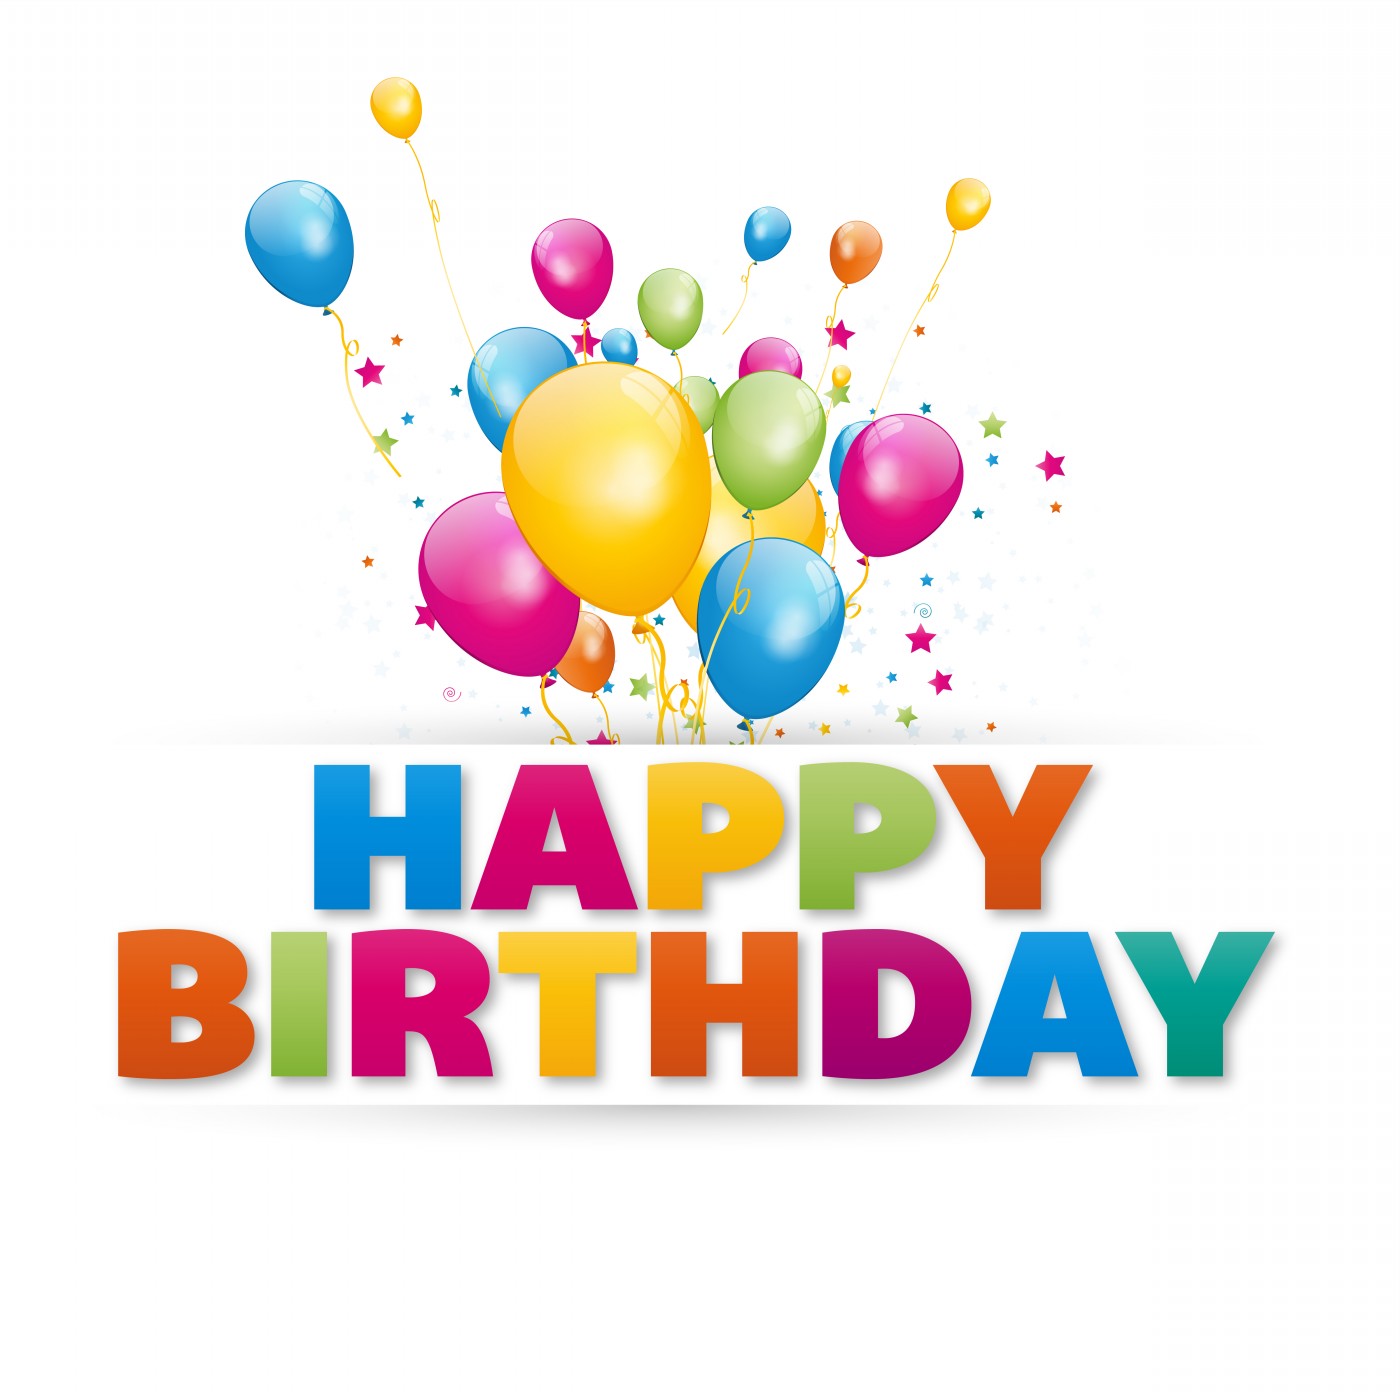 Happy-Birthday-to-You-Image-Card-1.jpg